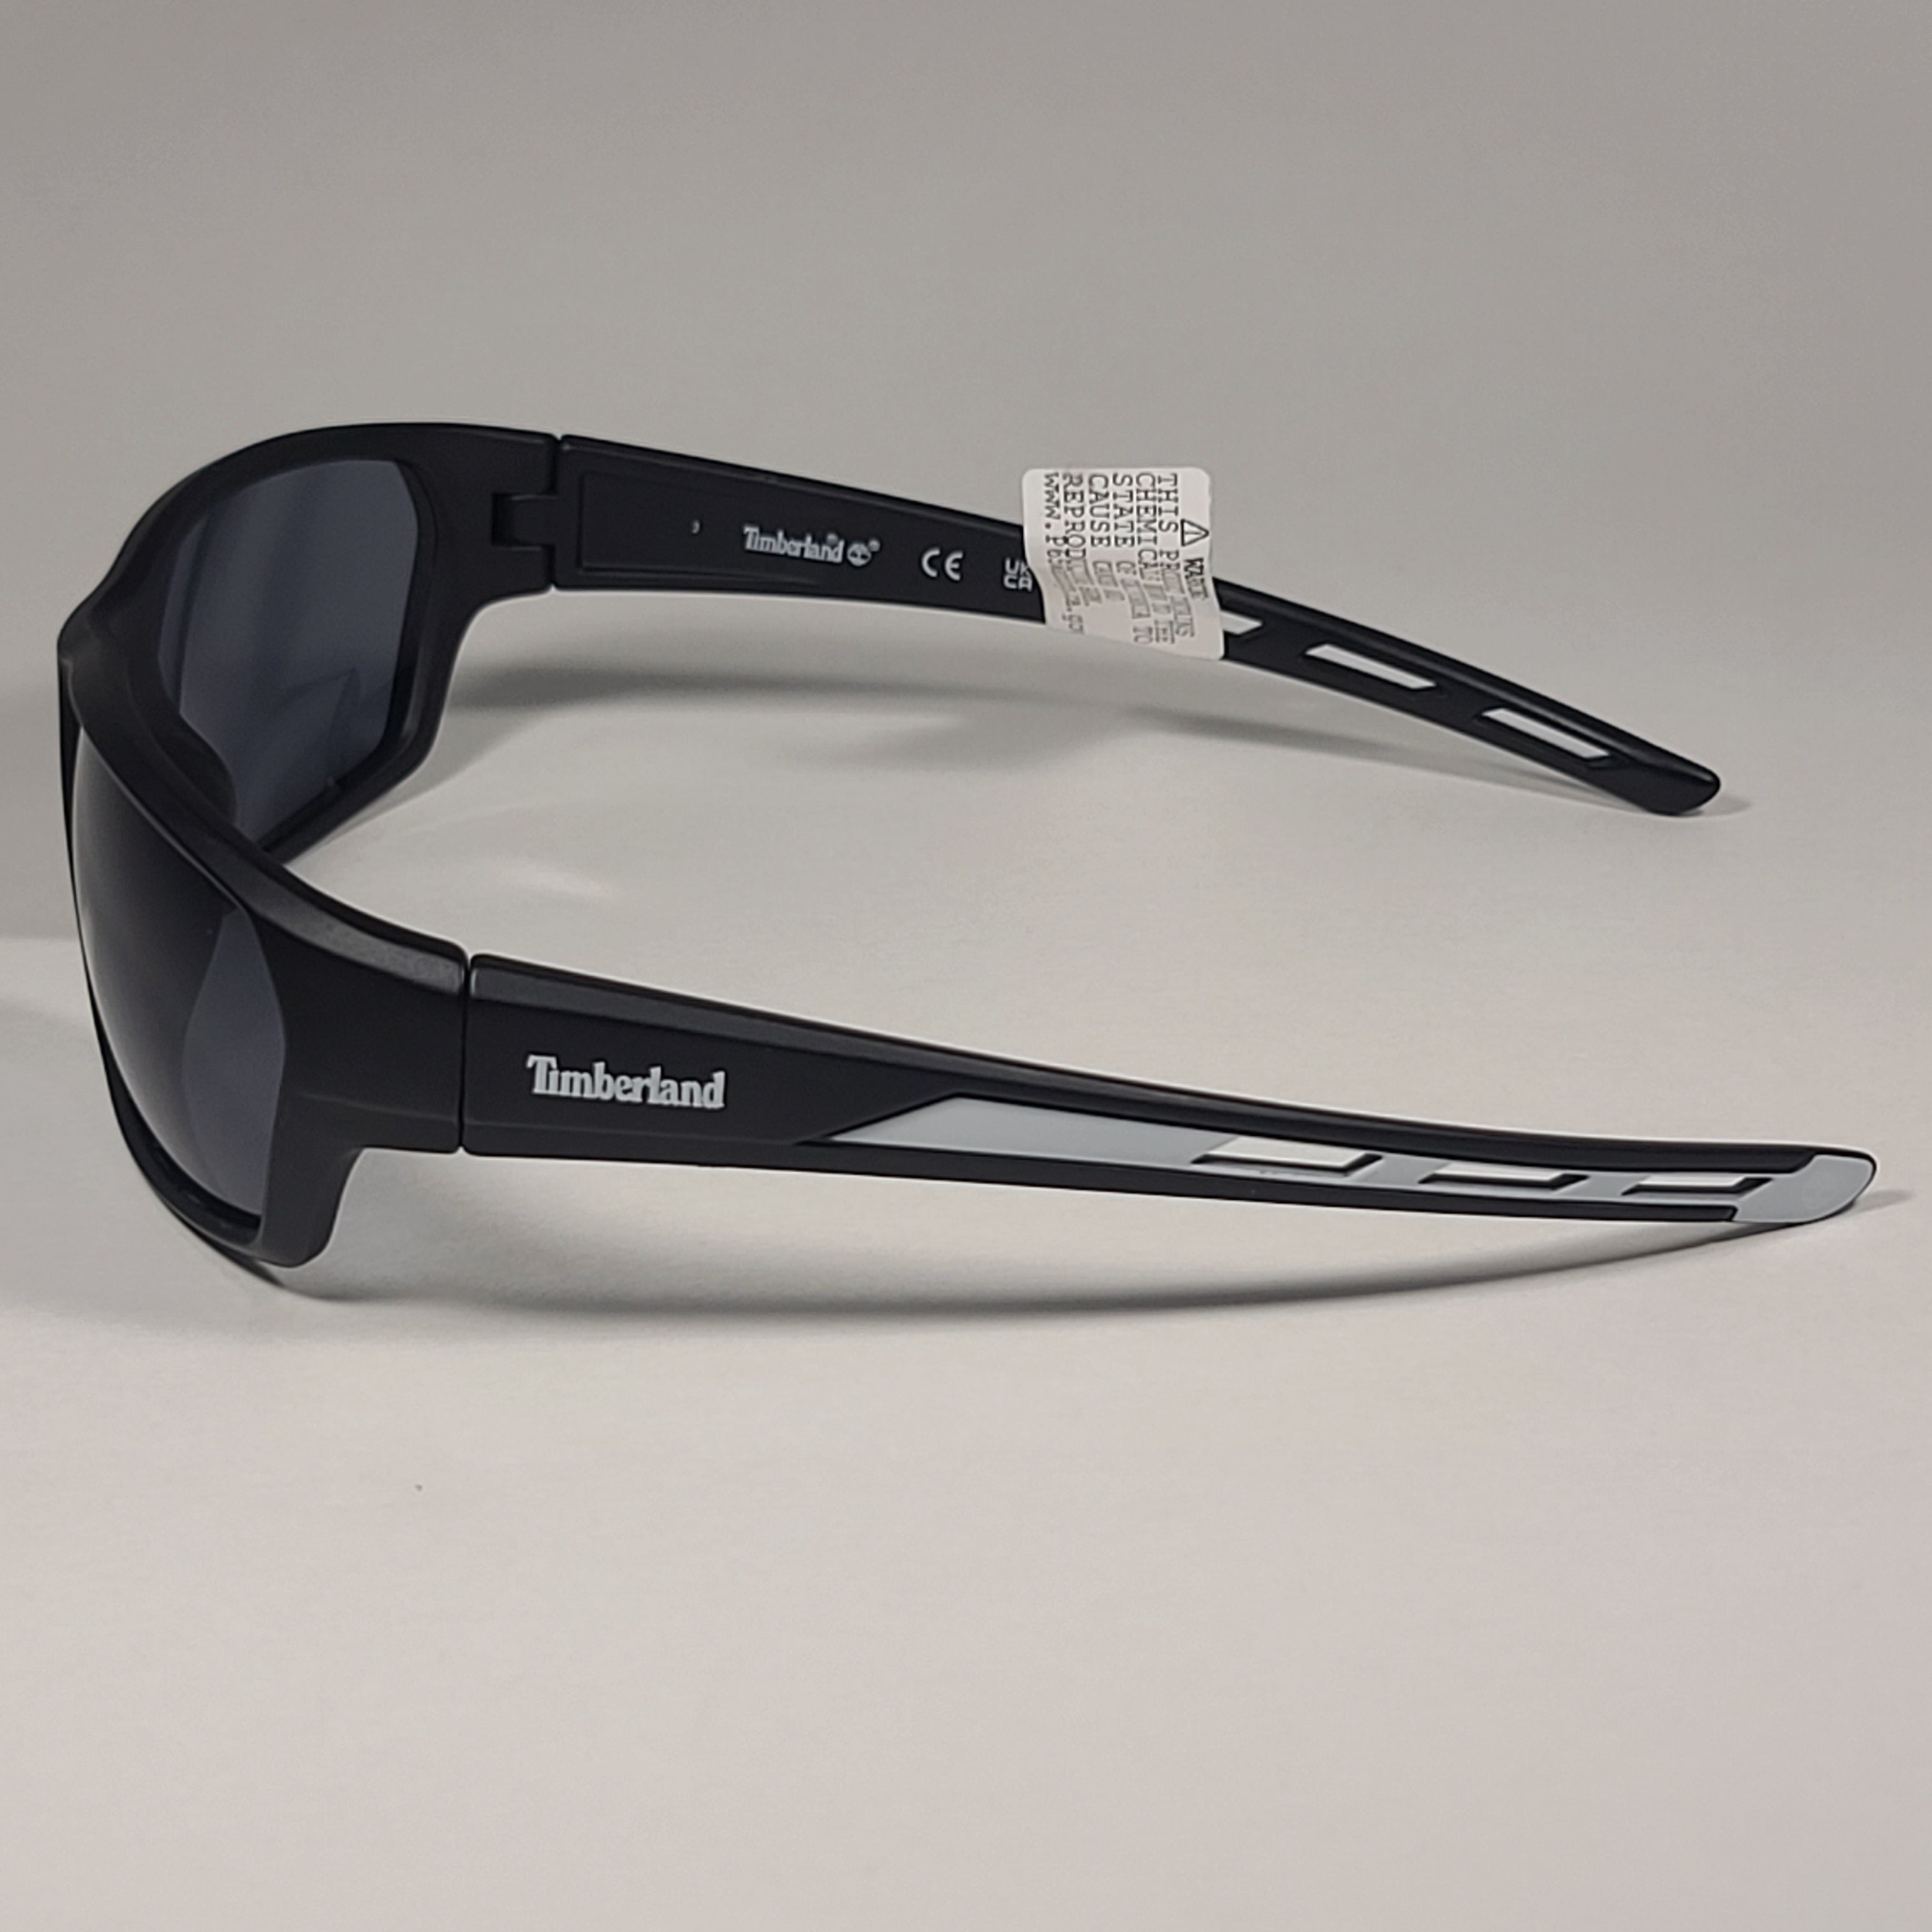 Buy Timberland Rectangular Black Sunglasses at Amazon.in